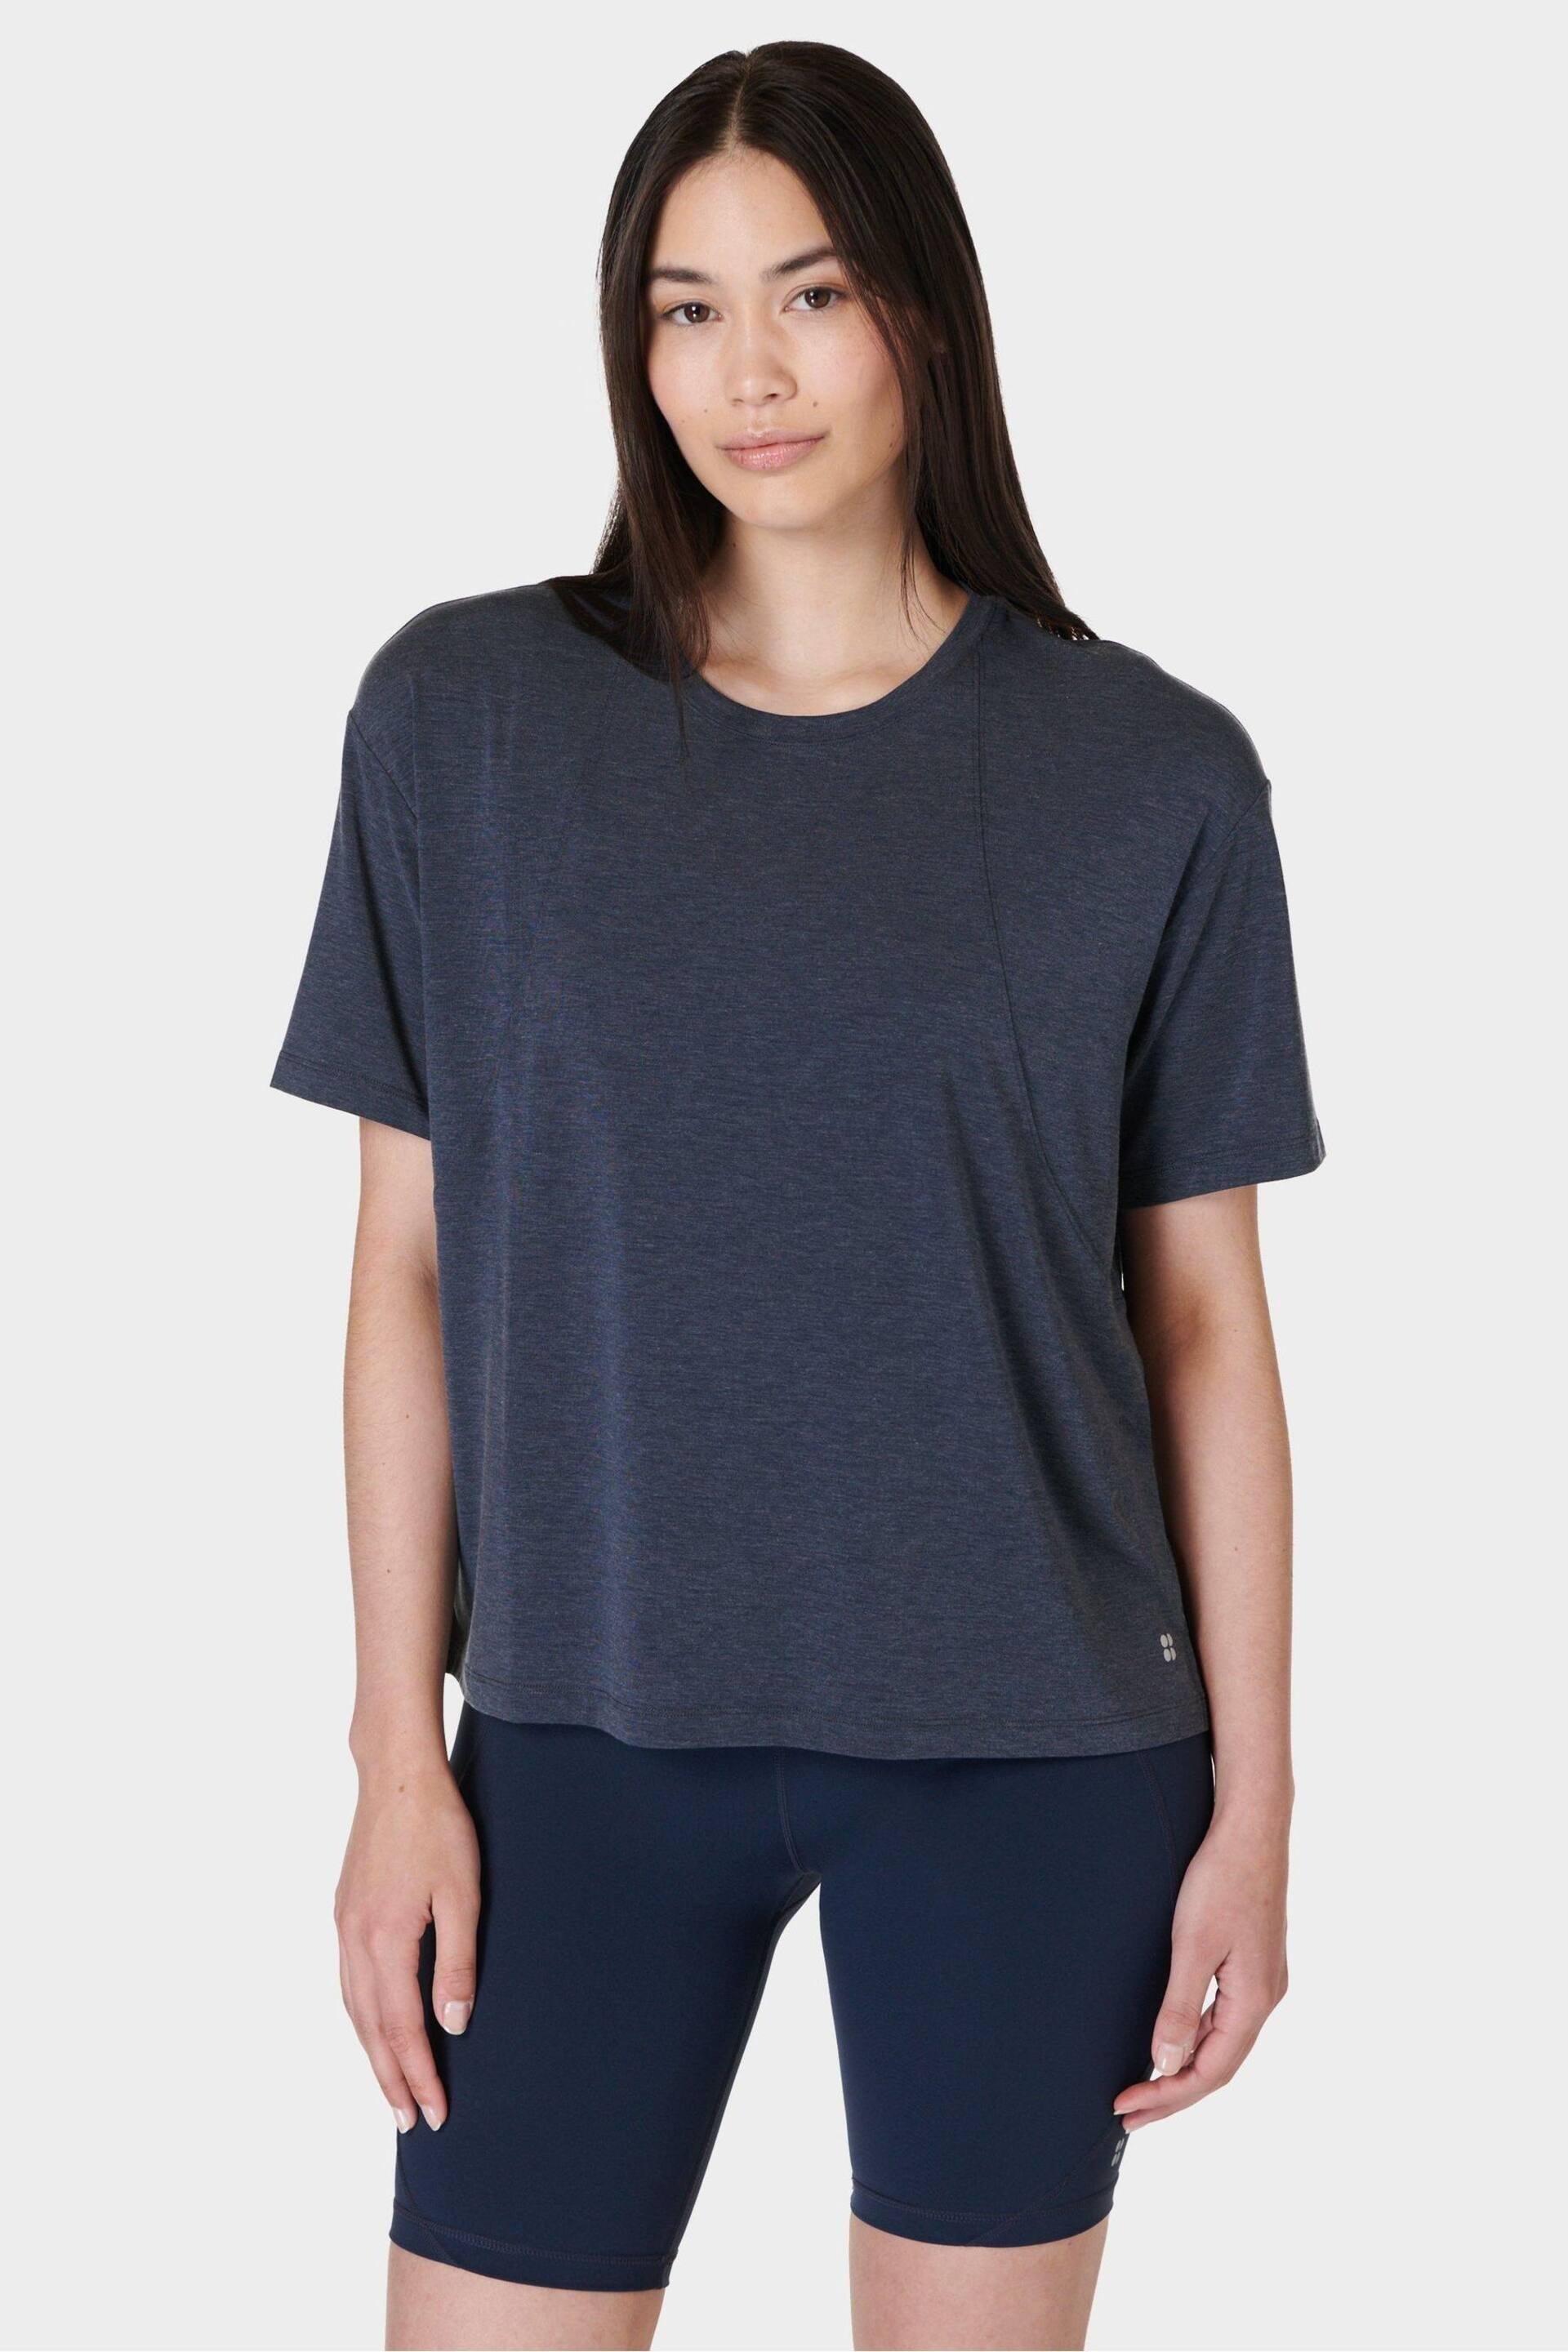 Sweaty Betty Navy Blue Soft Flow Studio T-Shirt - Image 3 of 8